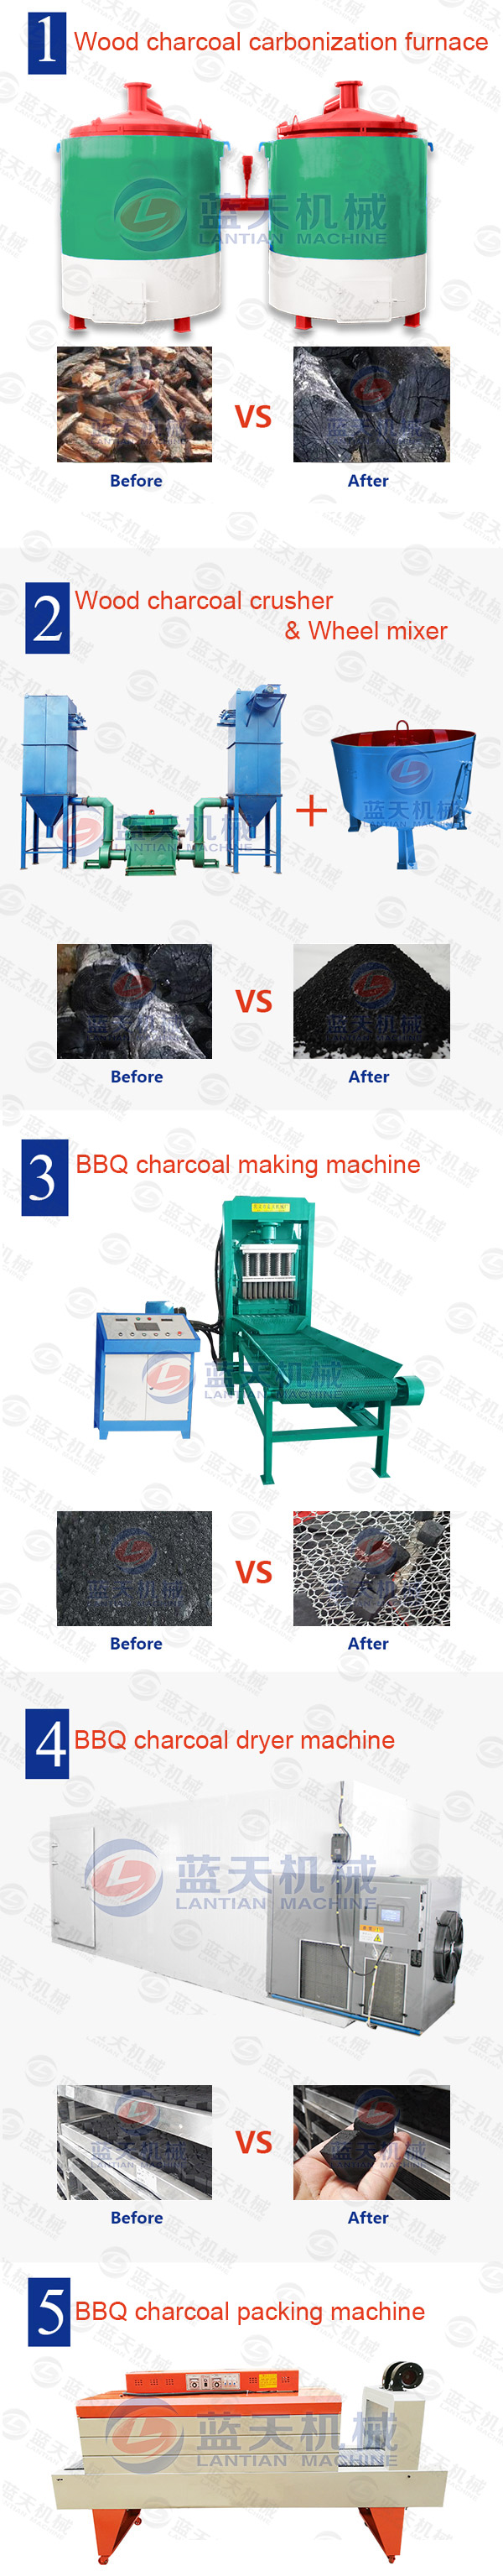 BBQ charcoal machine